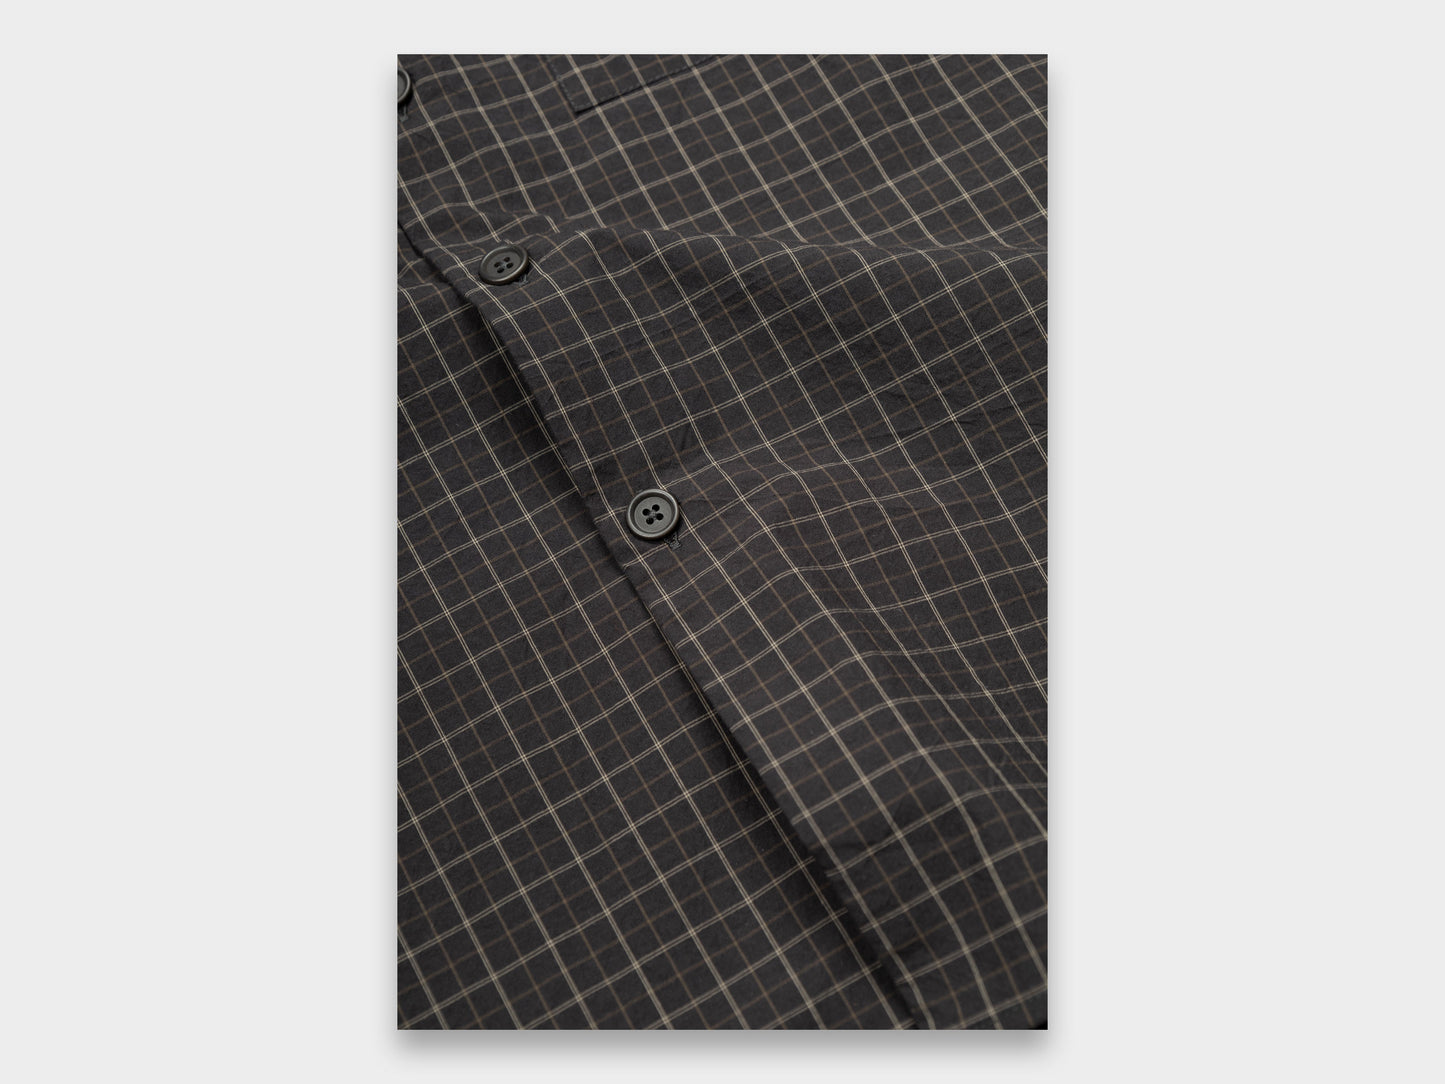 Evan Kinori Big Shirt Two Grid Cloth Navy Grey